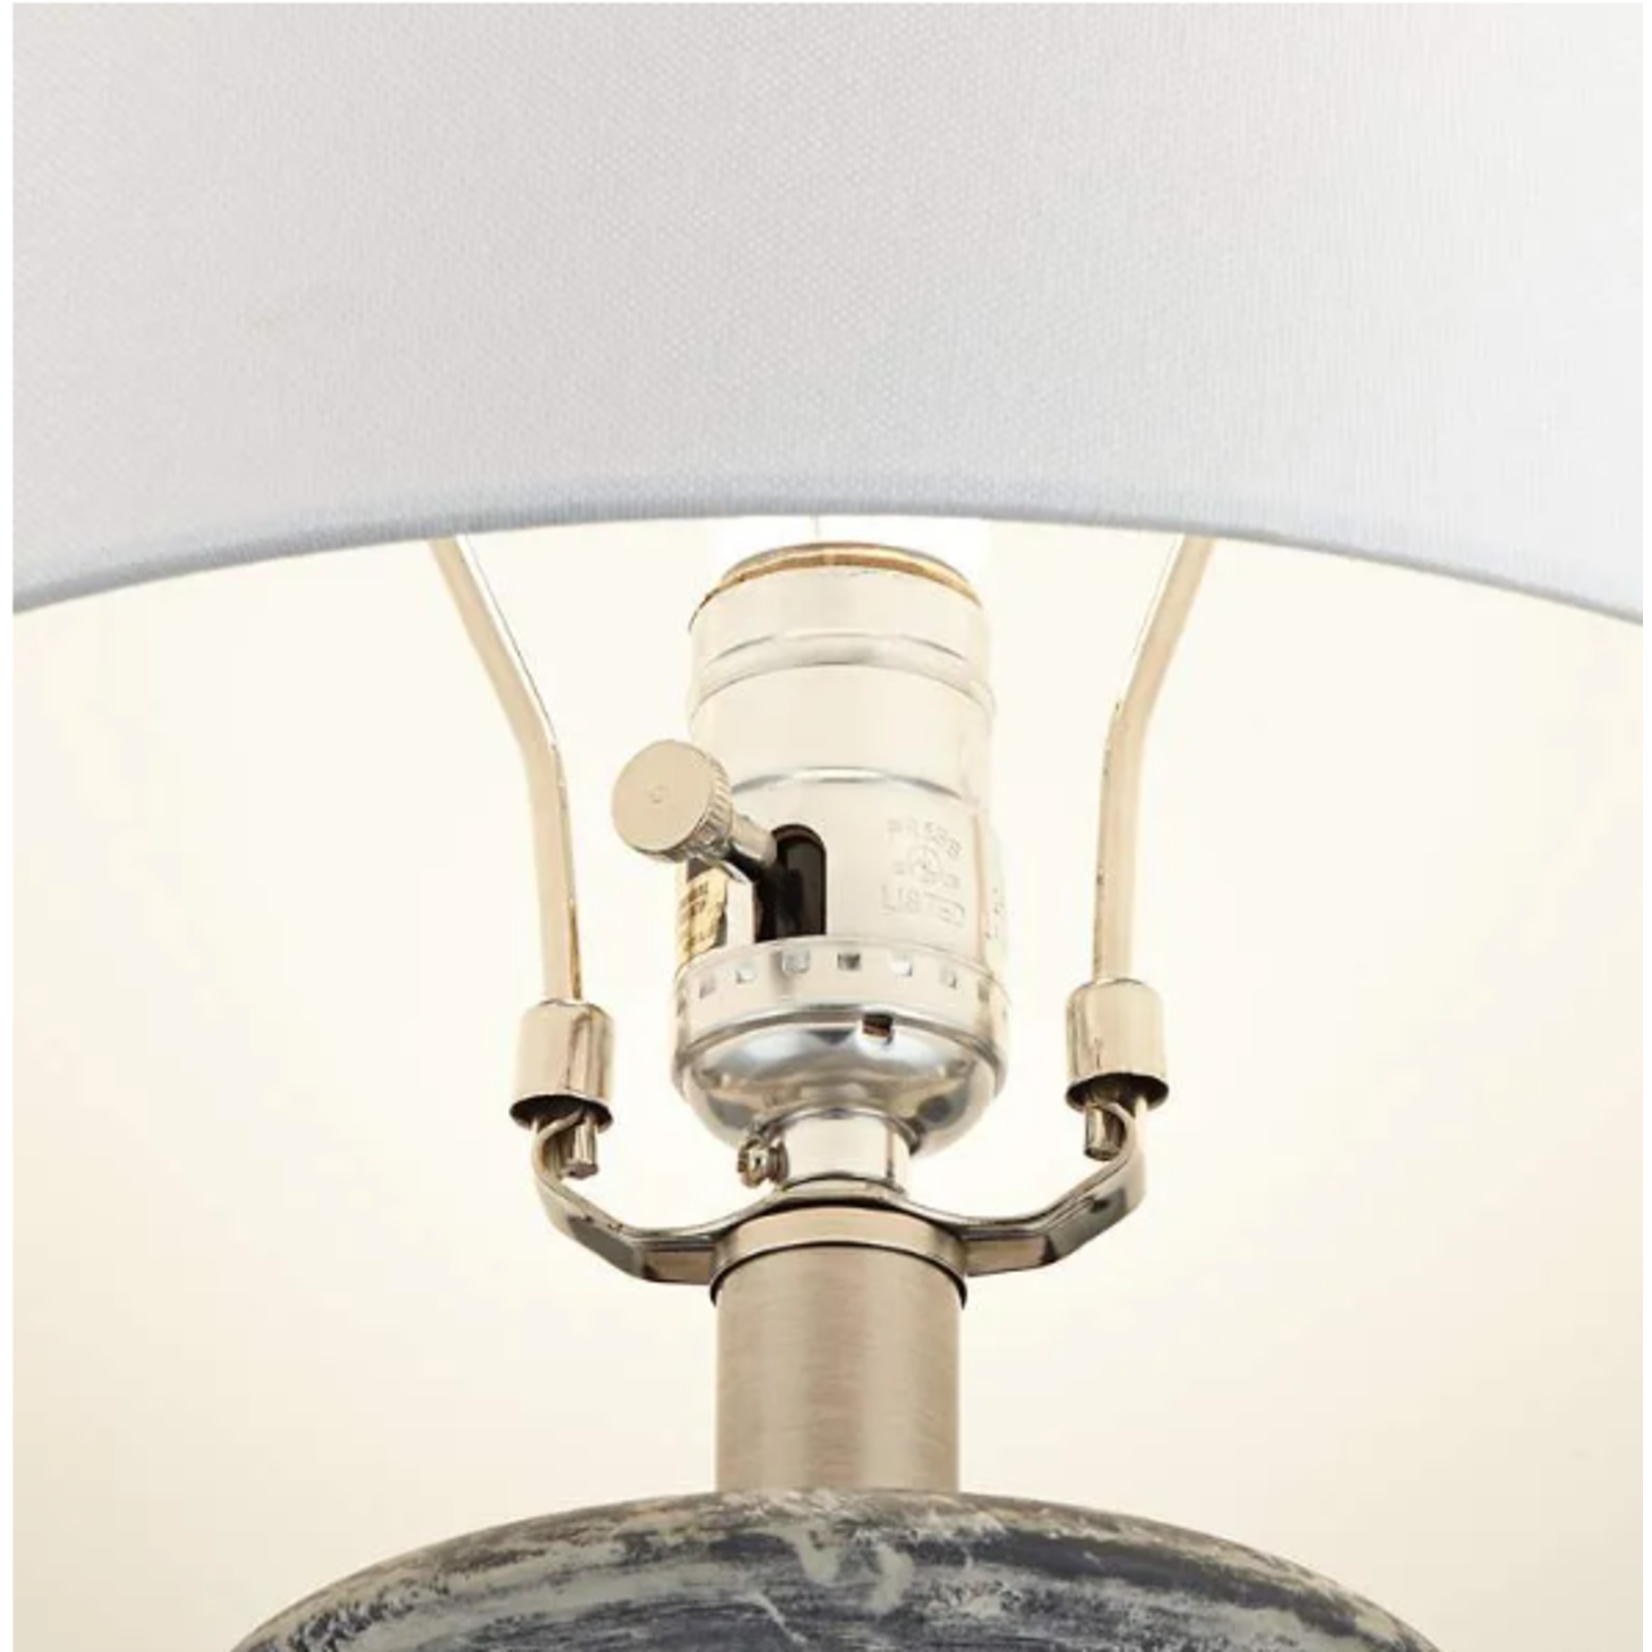 Mickler & Co. Ansley Table Lamp